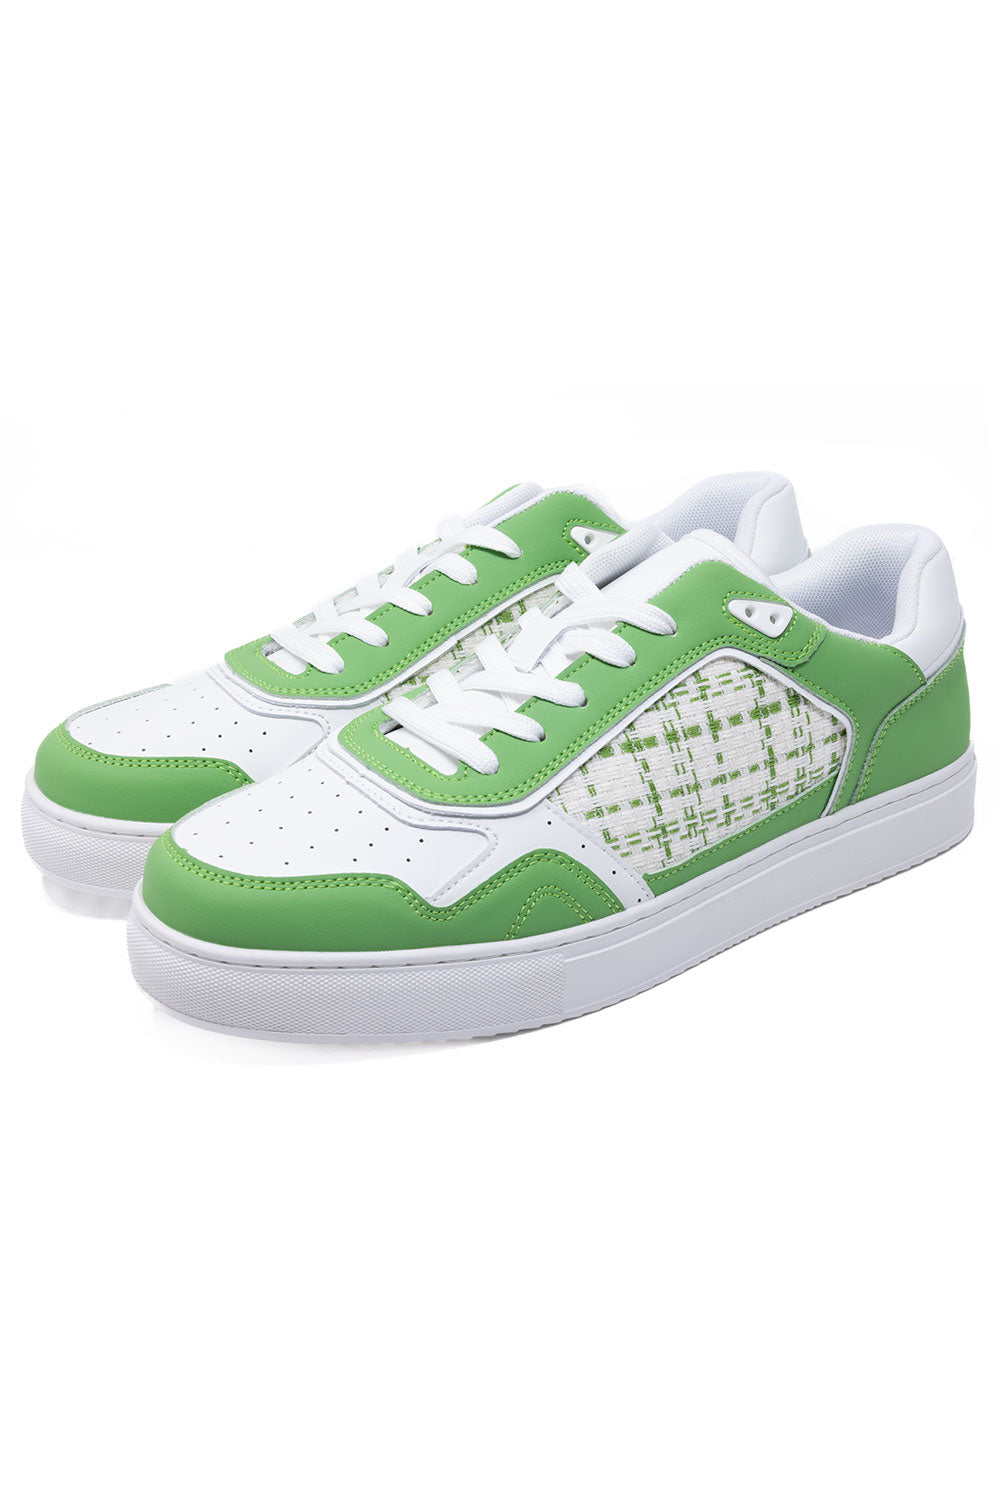 Barabas Men's Premium Walking Running Sneakers Low Cut 4SK02 Light Green